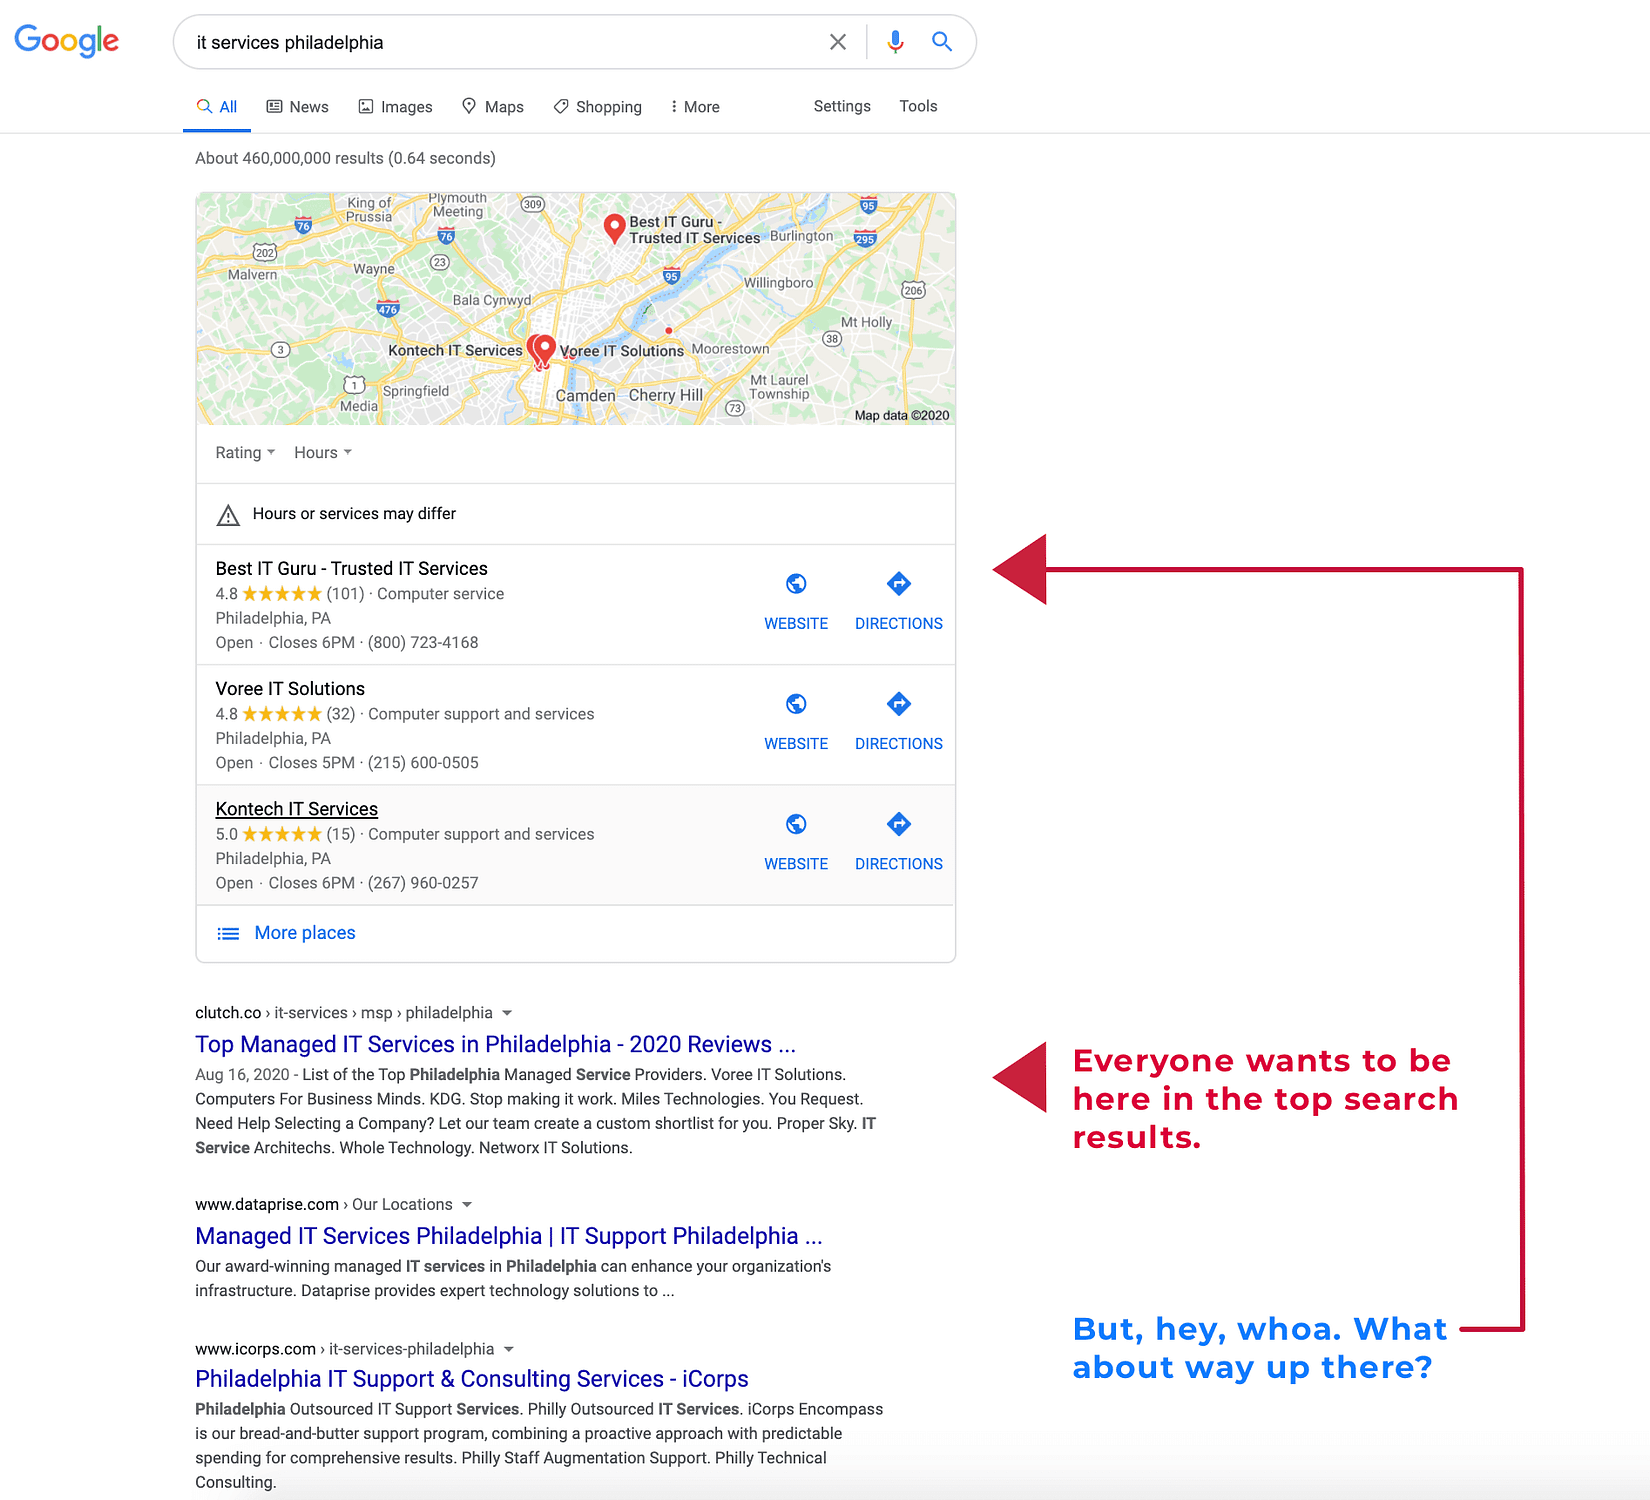 google my business listing